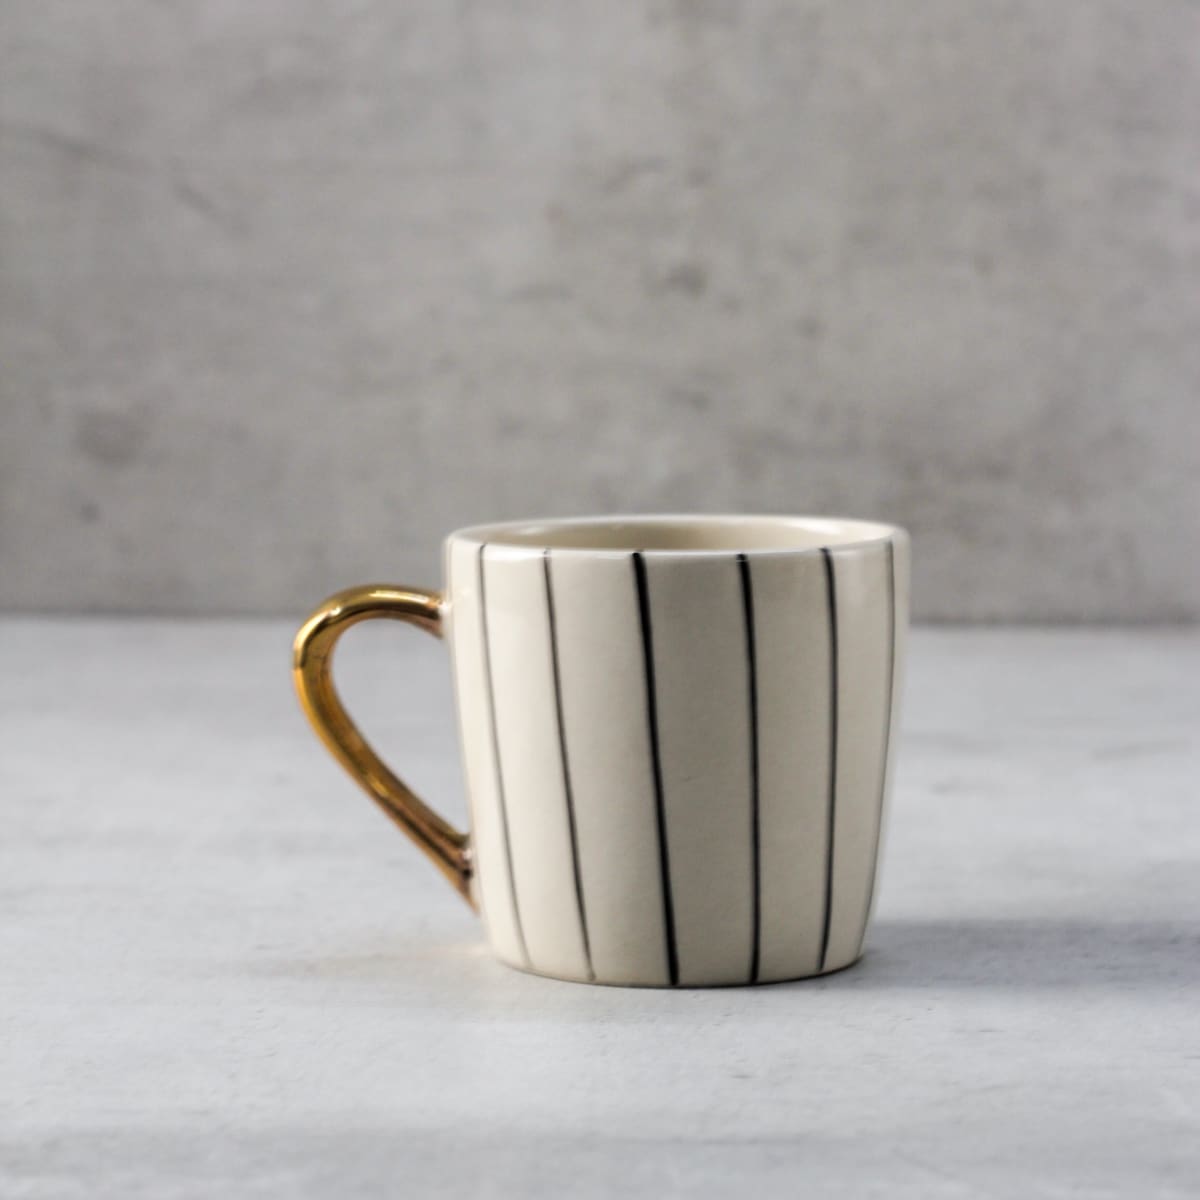 Iris Black Vertical Striped Mug with Golden Handle - Set of 2 - Home Artisan